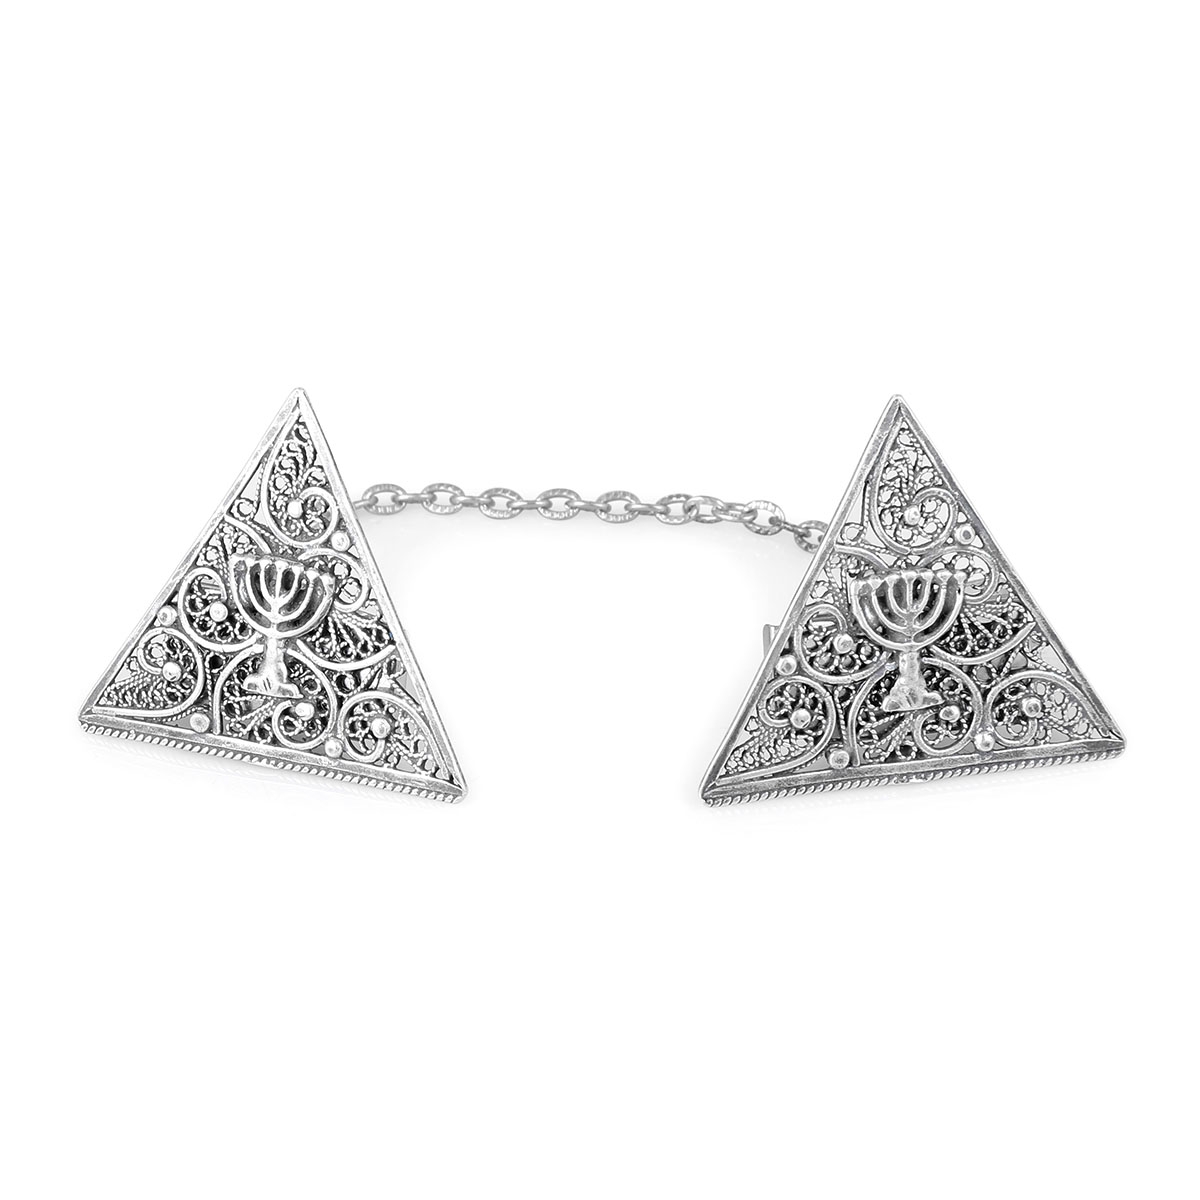 Traditional Yemenite Art Handcrafted Triangular Sterling Silver Menorah Tallit Clips with Filigree Design - 1